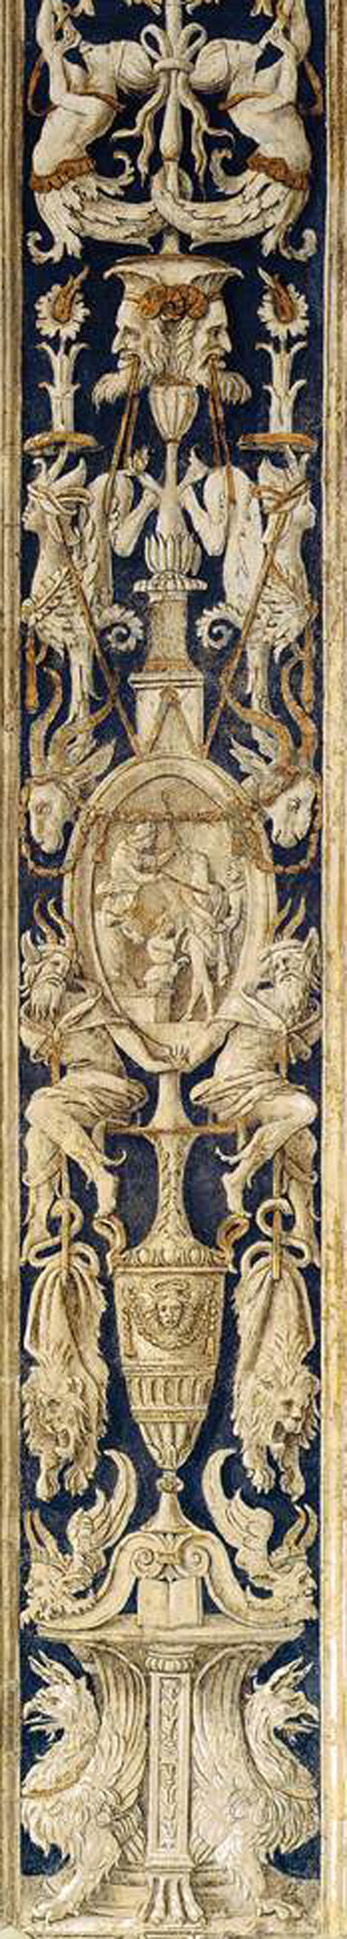 1489-91 candelabra detail